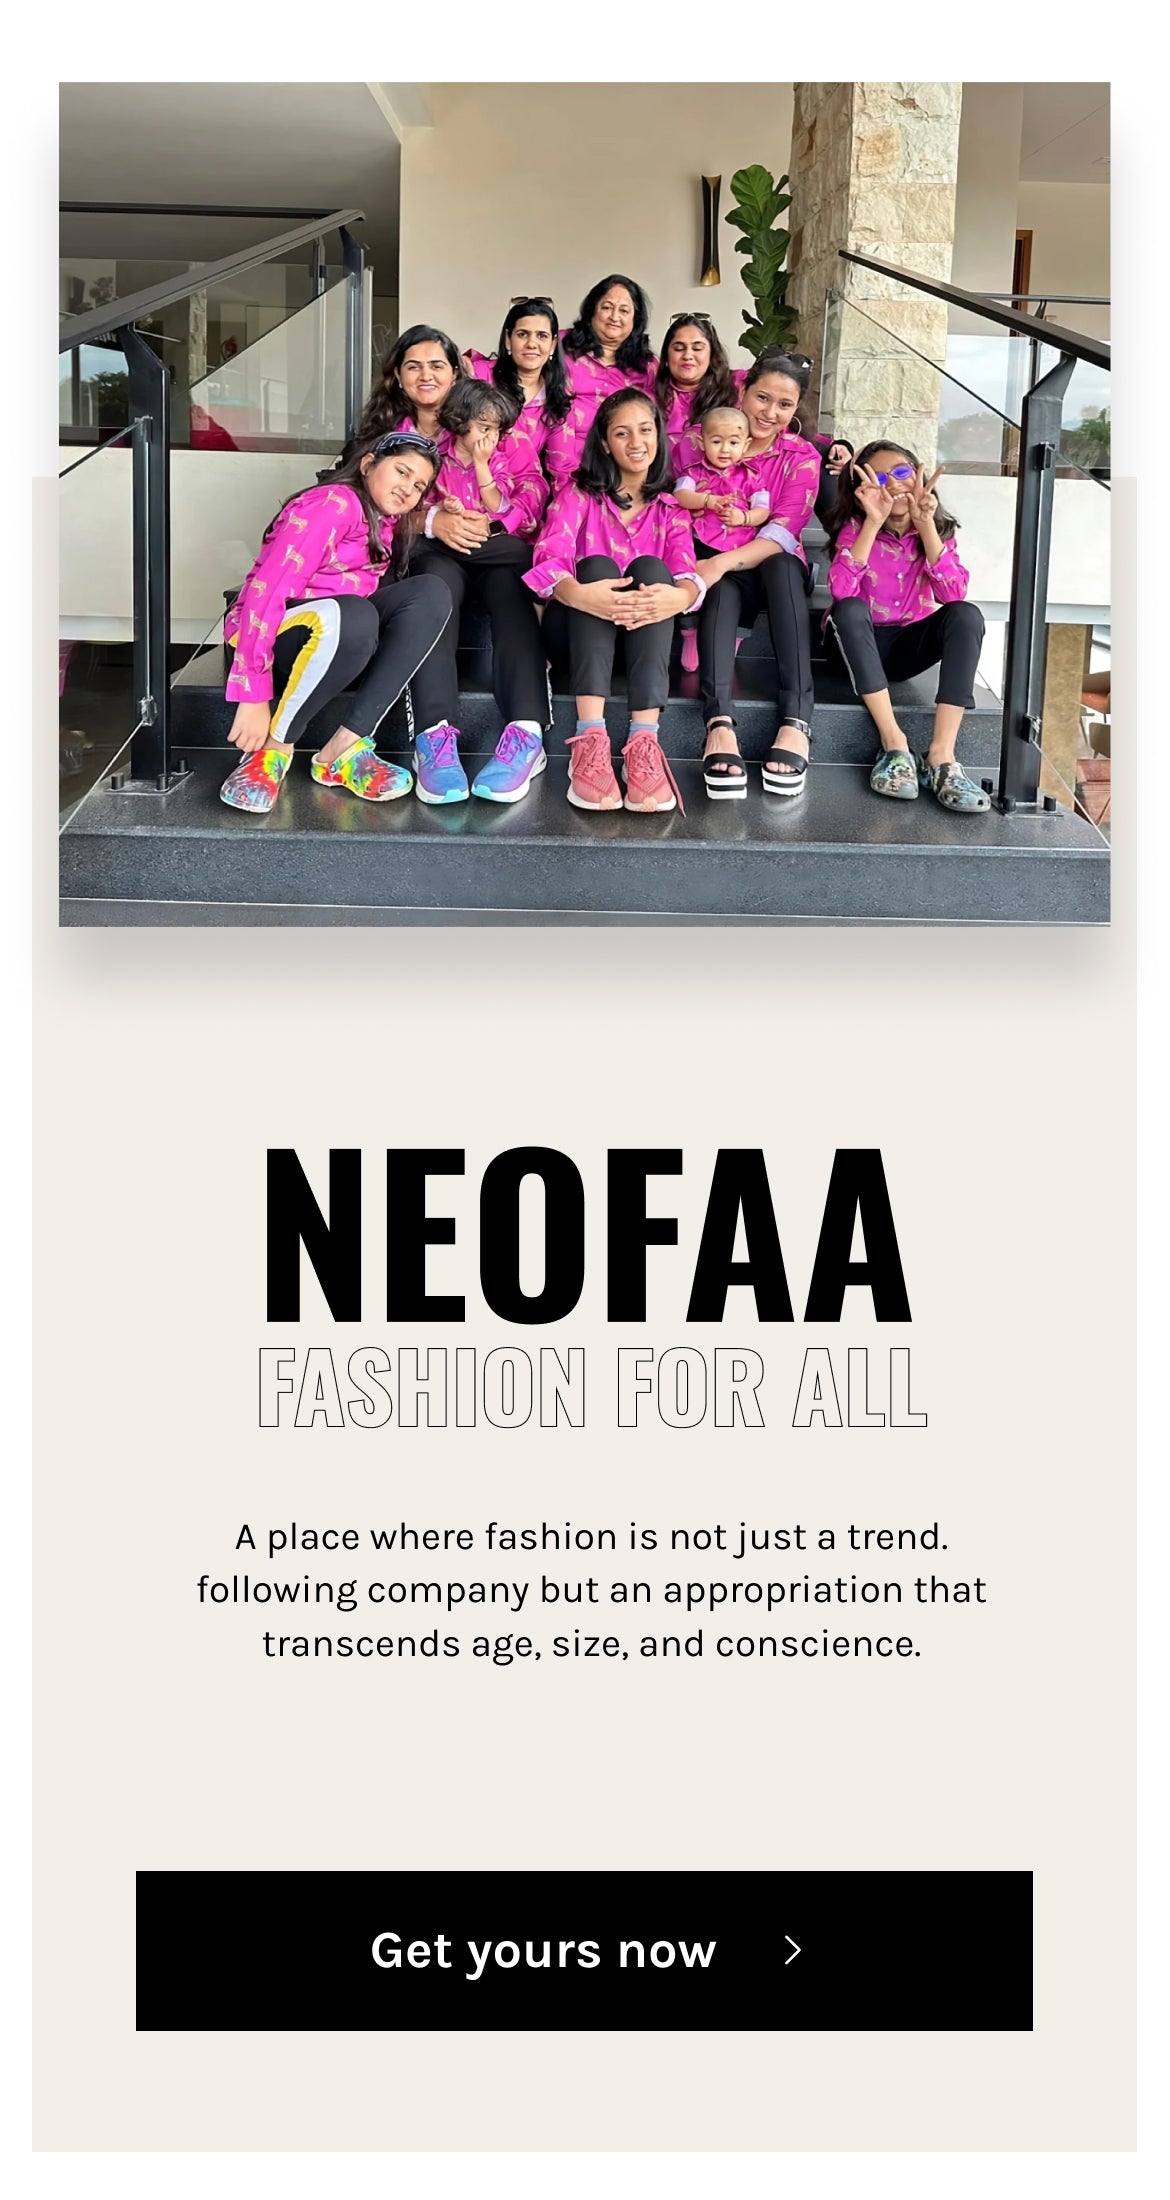 Neofaa_fashion_for_all.jpg